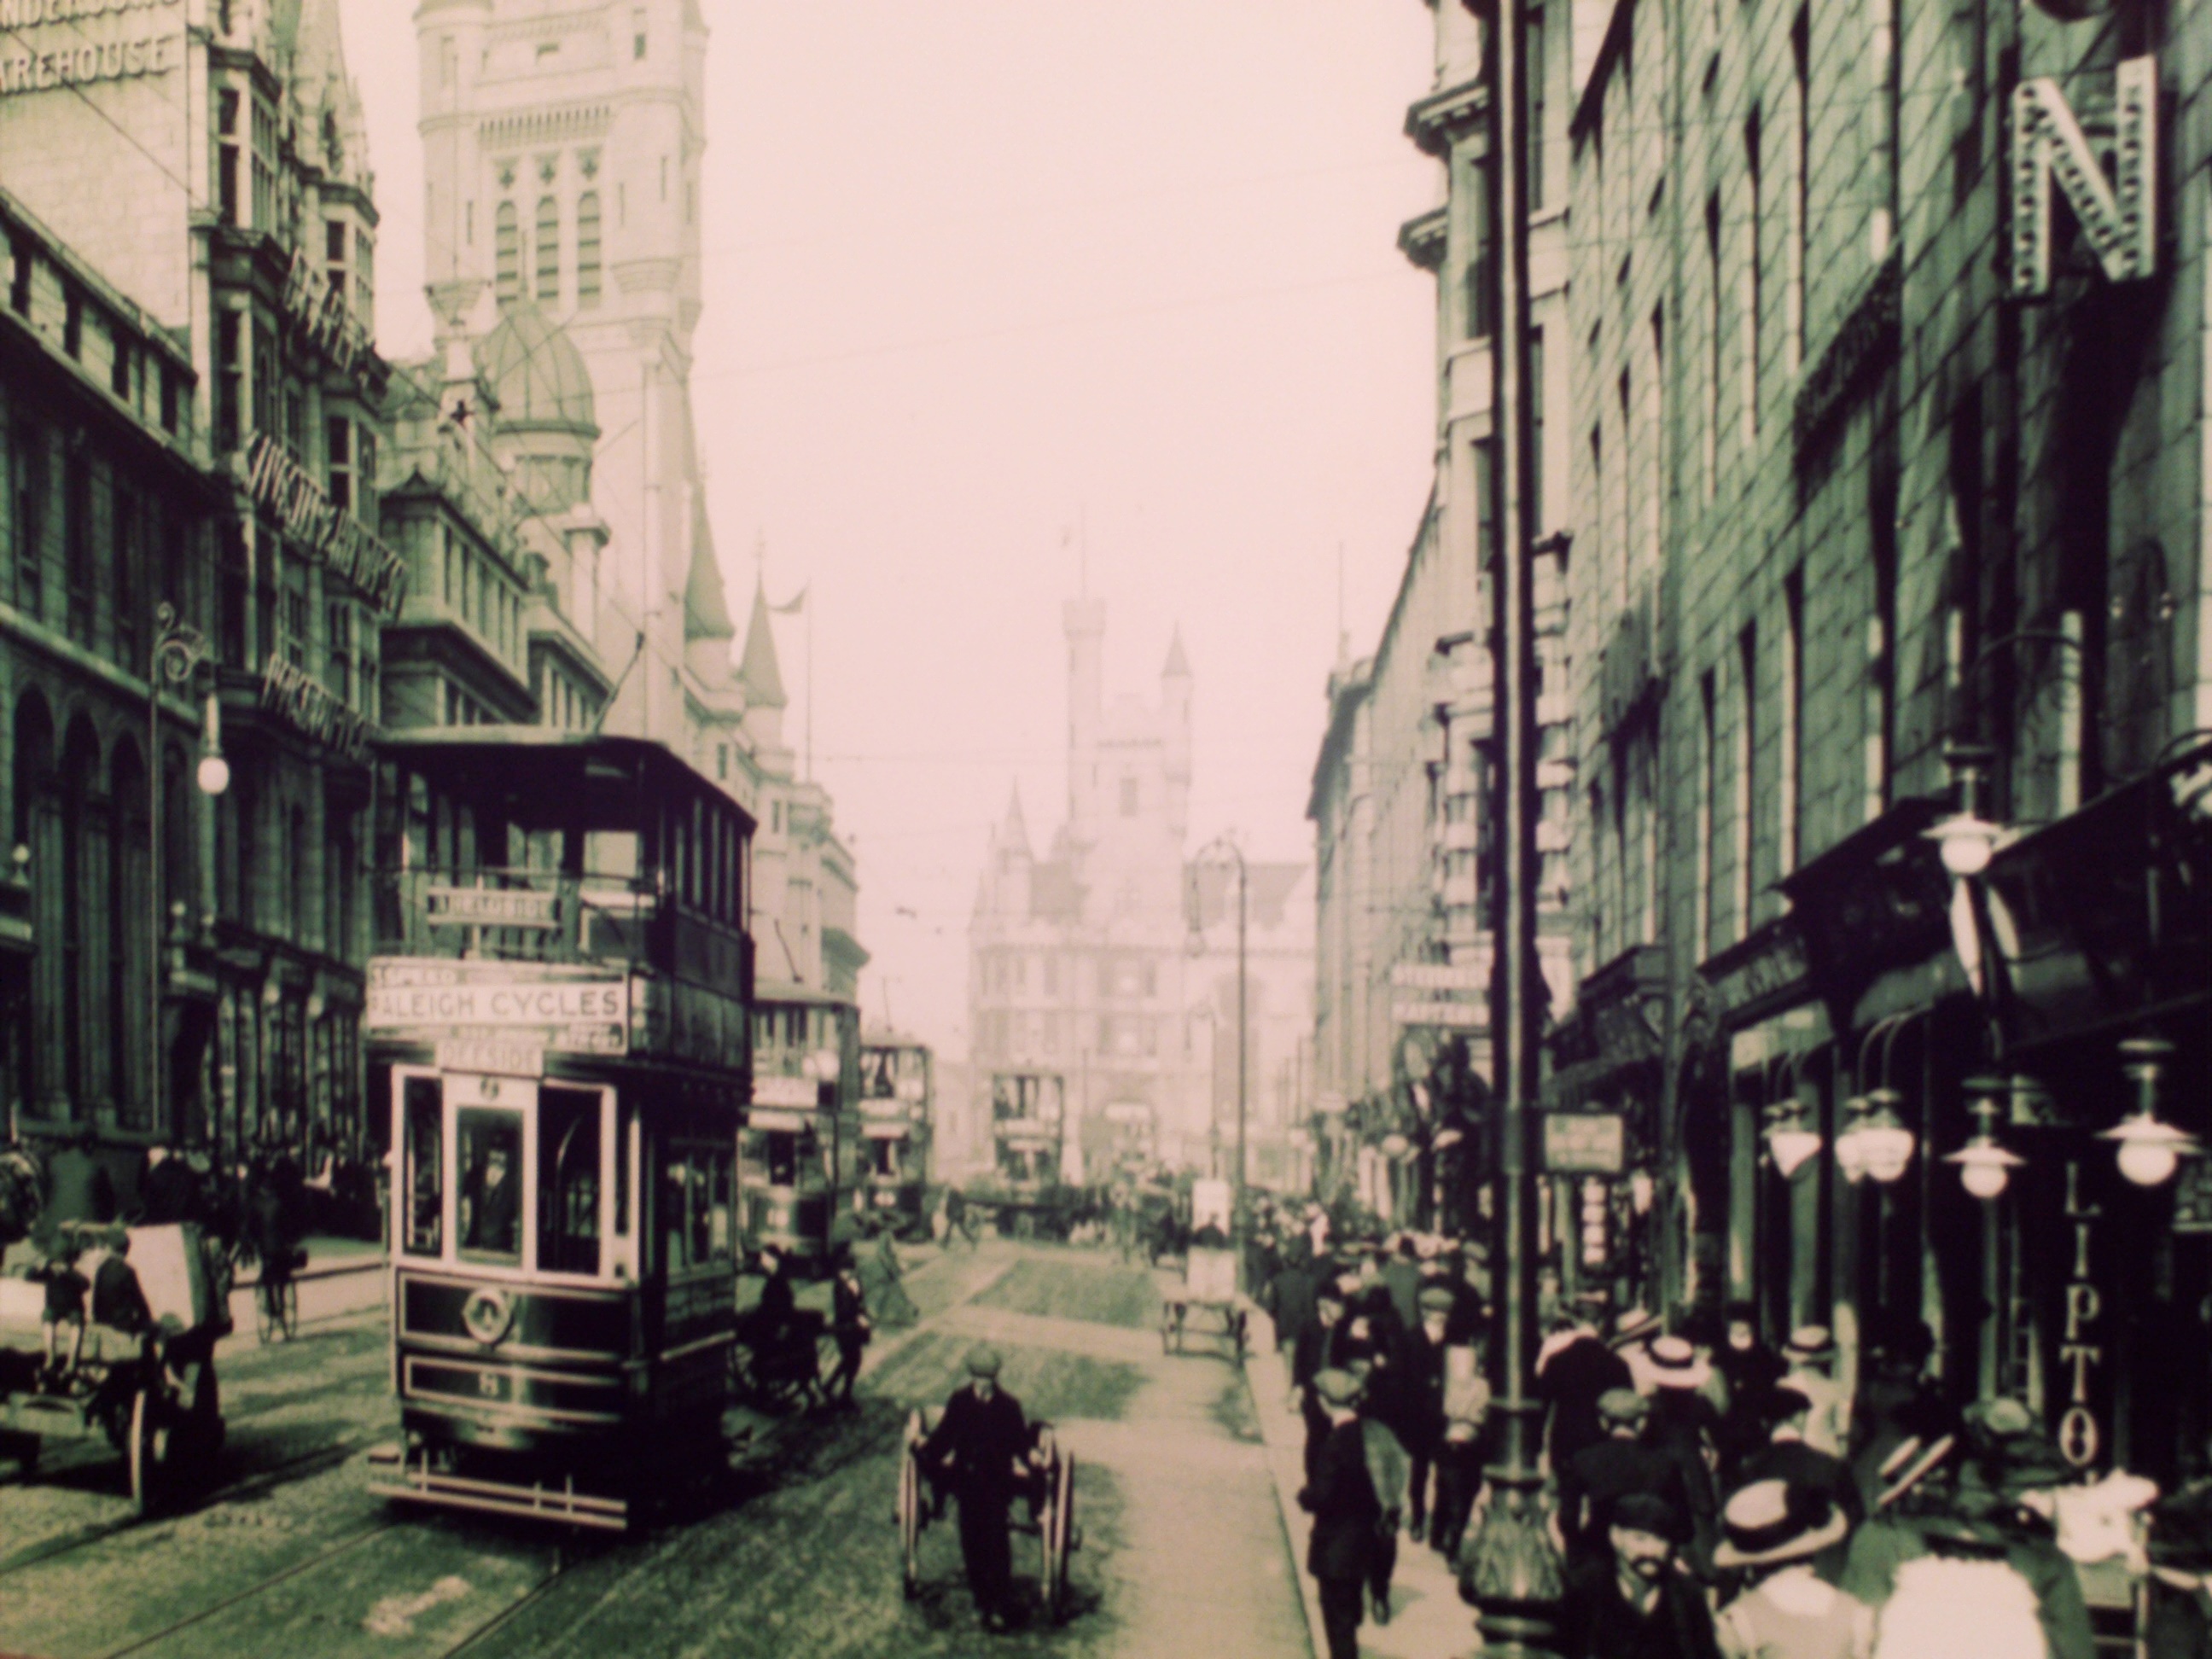 Edinburgh trams from the 1900s